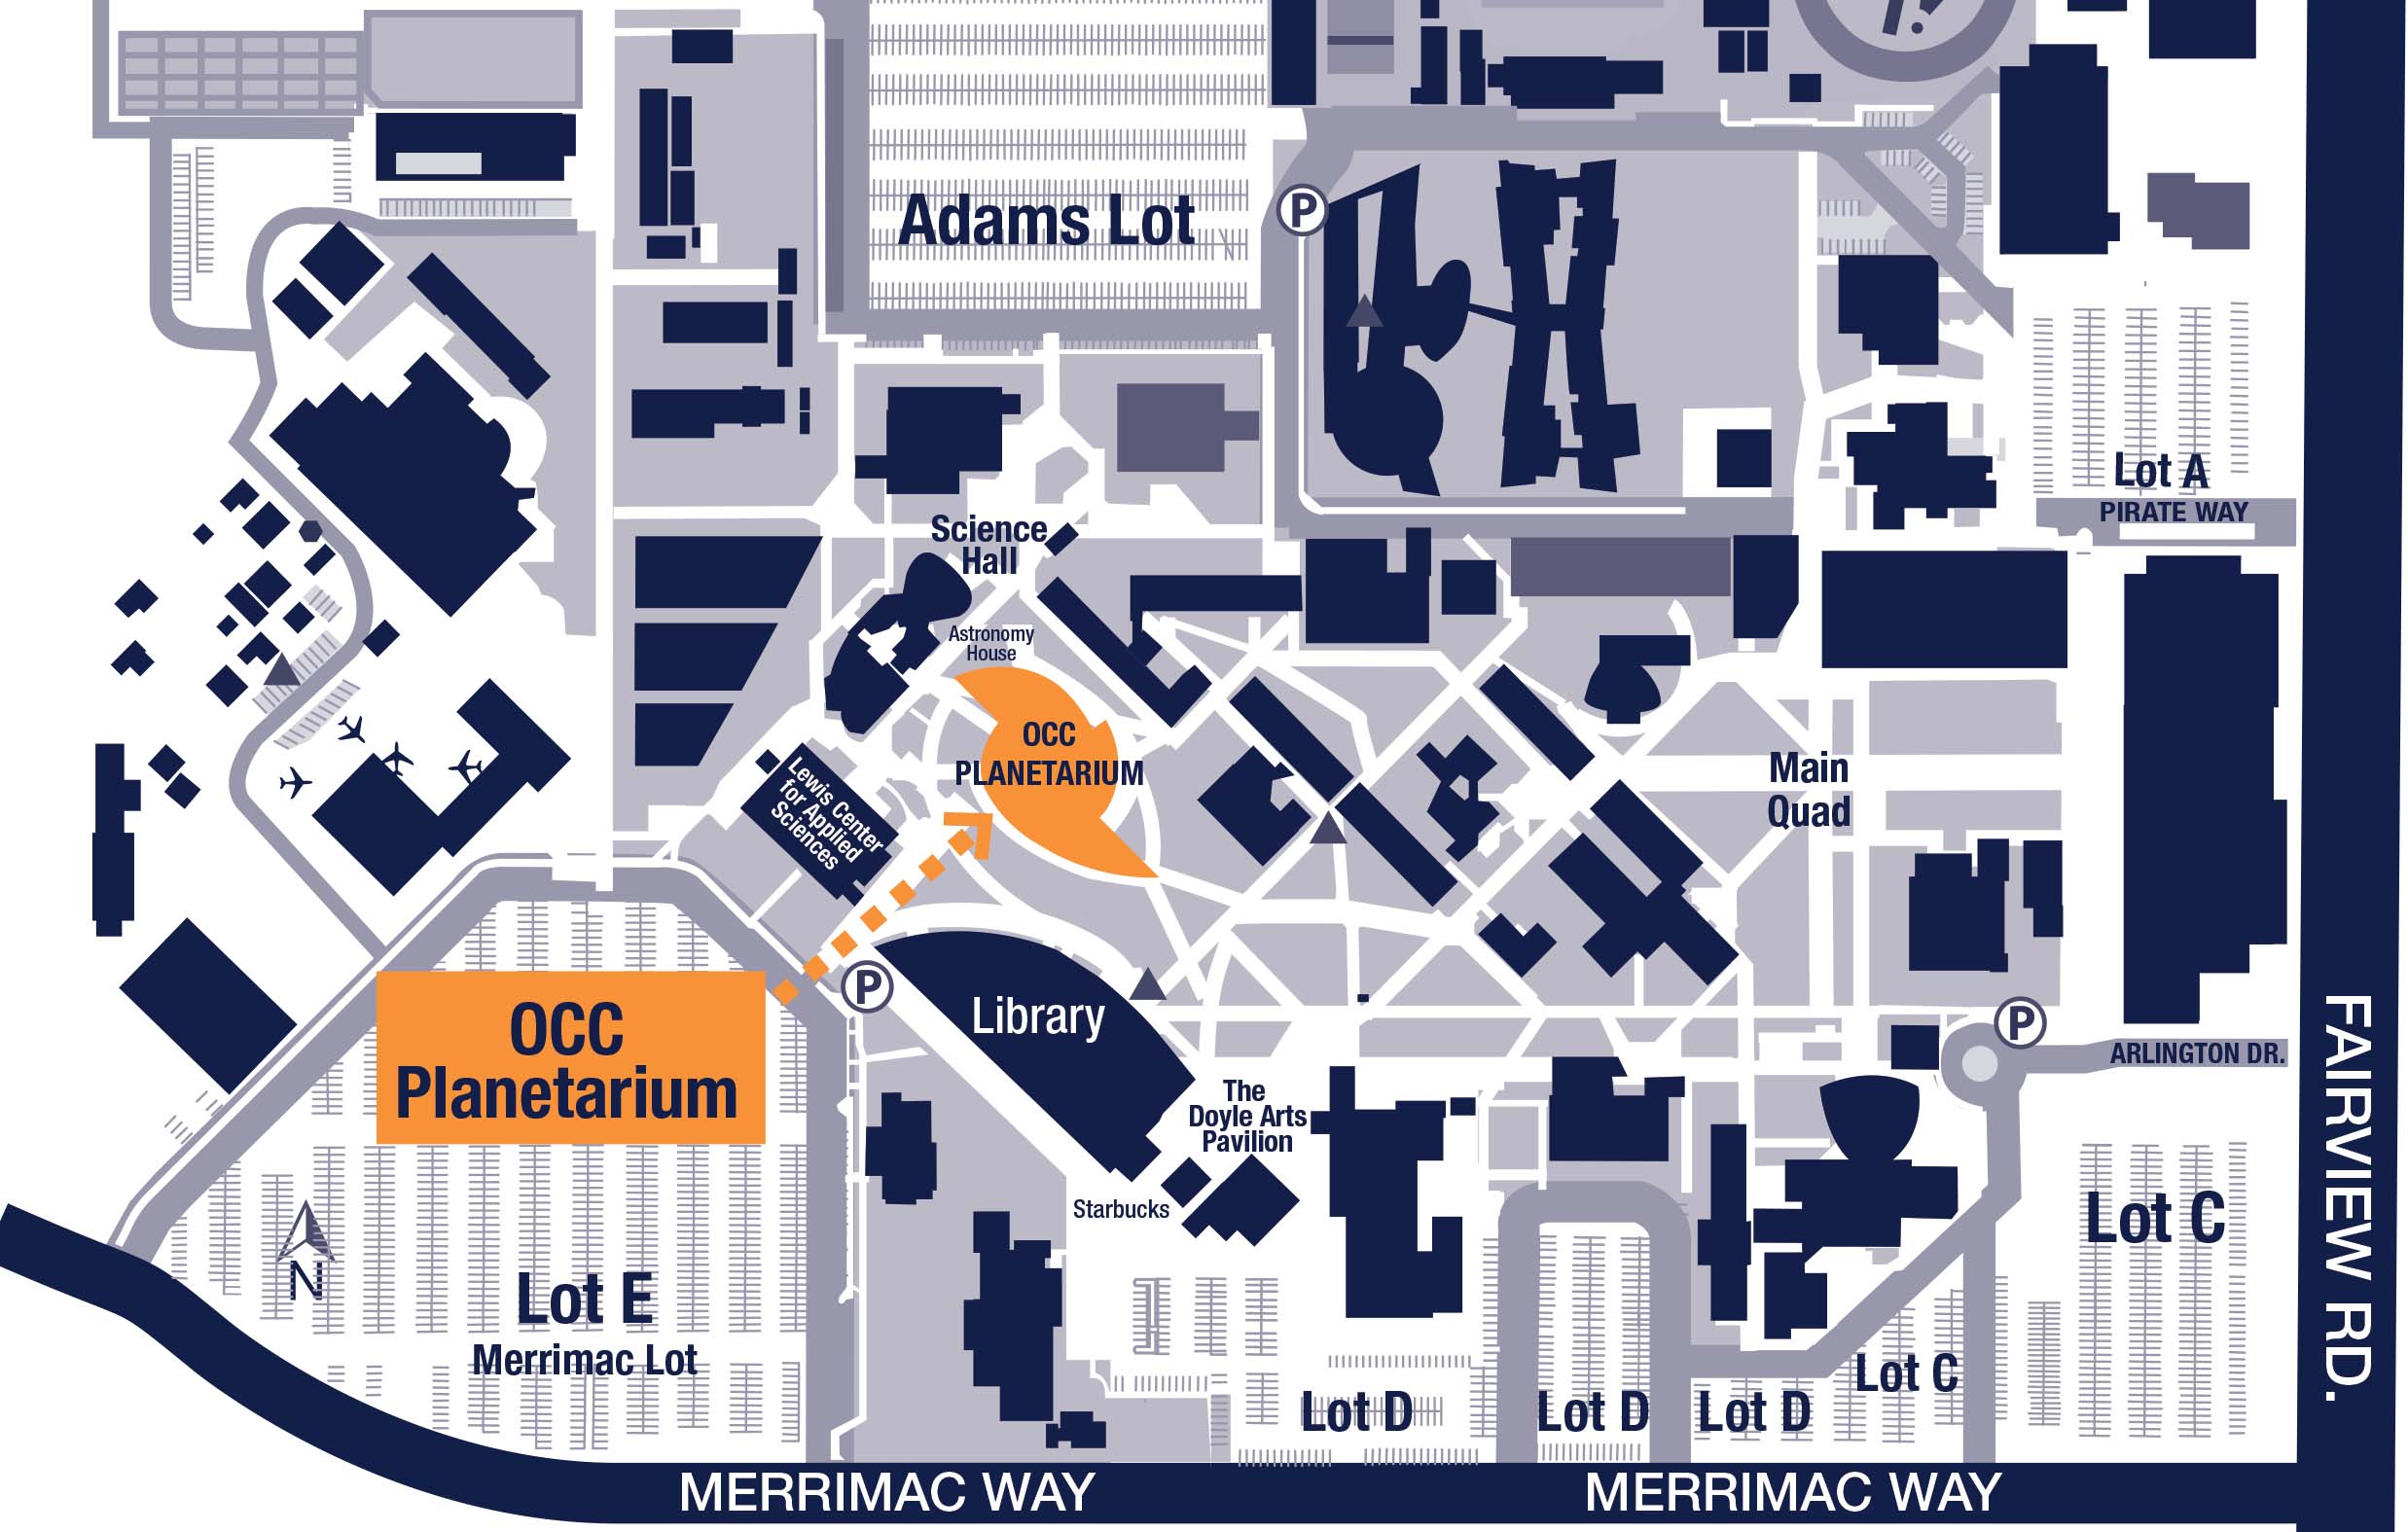 planetarium location marked in orange on the campus map